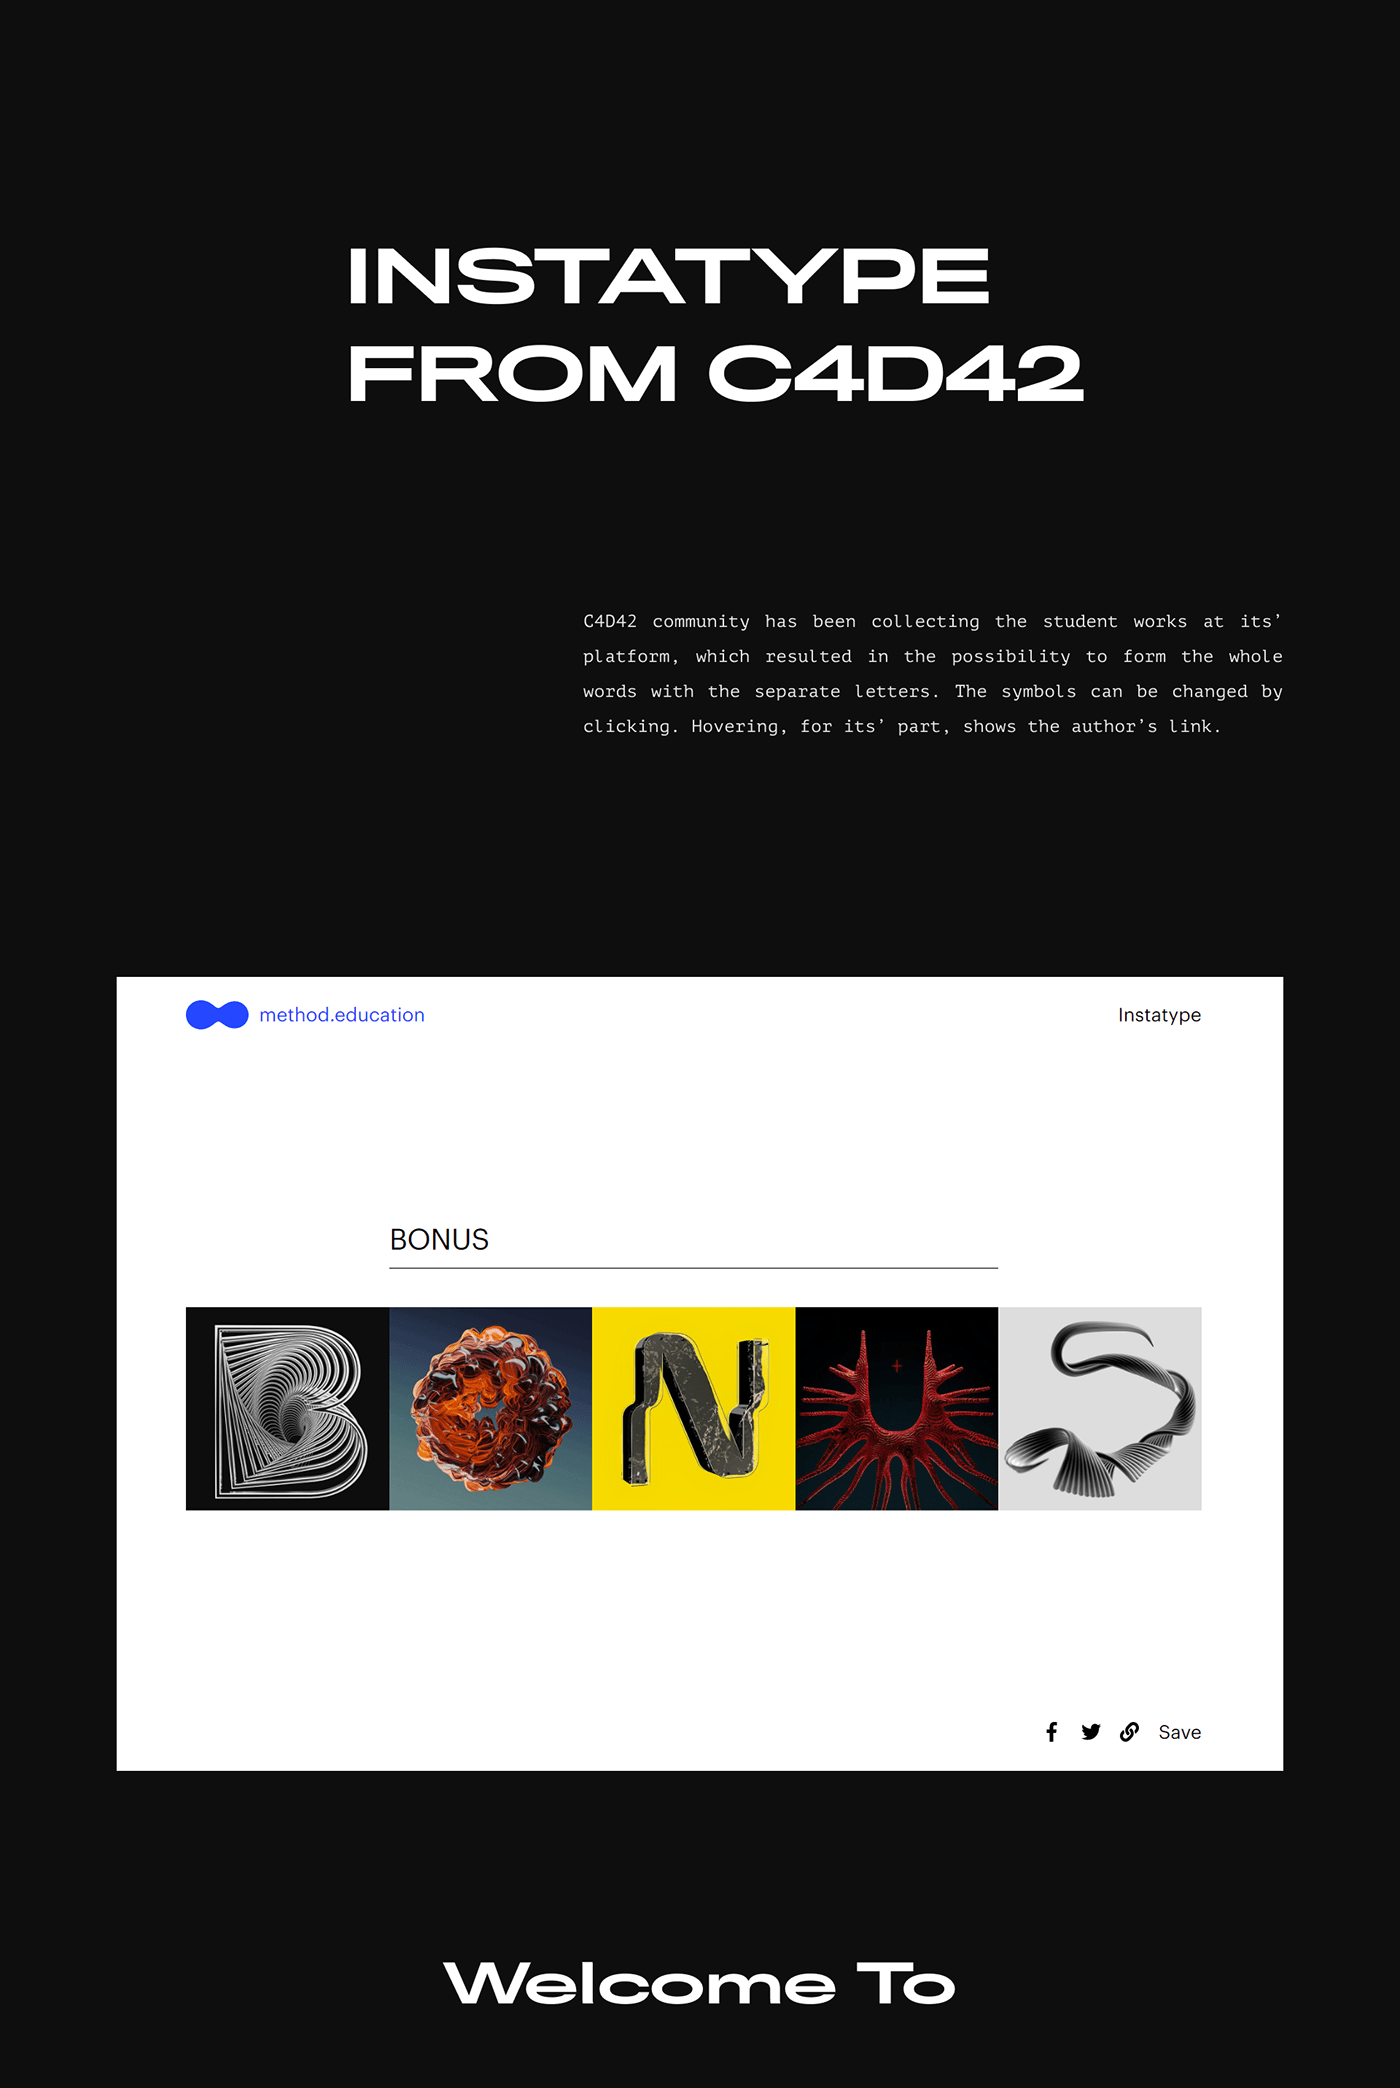 36daysoftype cinema 4d letter alphabet 36 days type number lettering 3D 3D Type